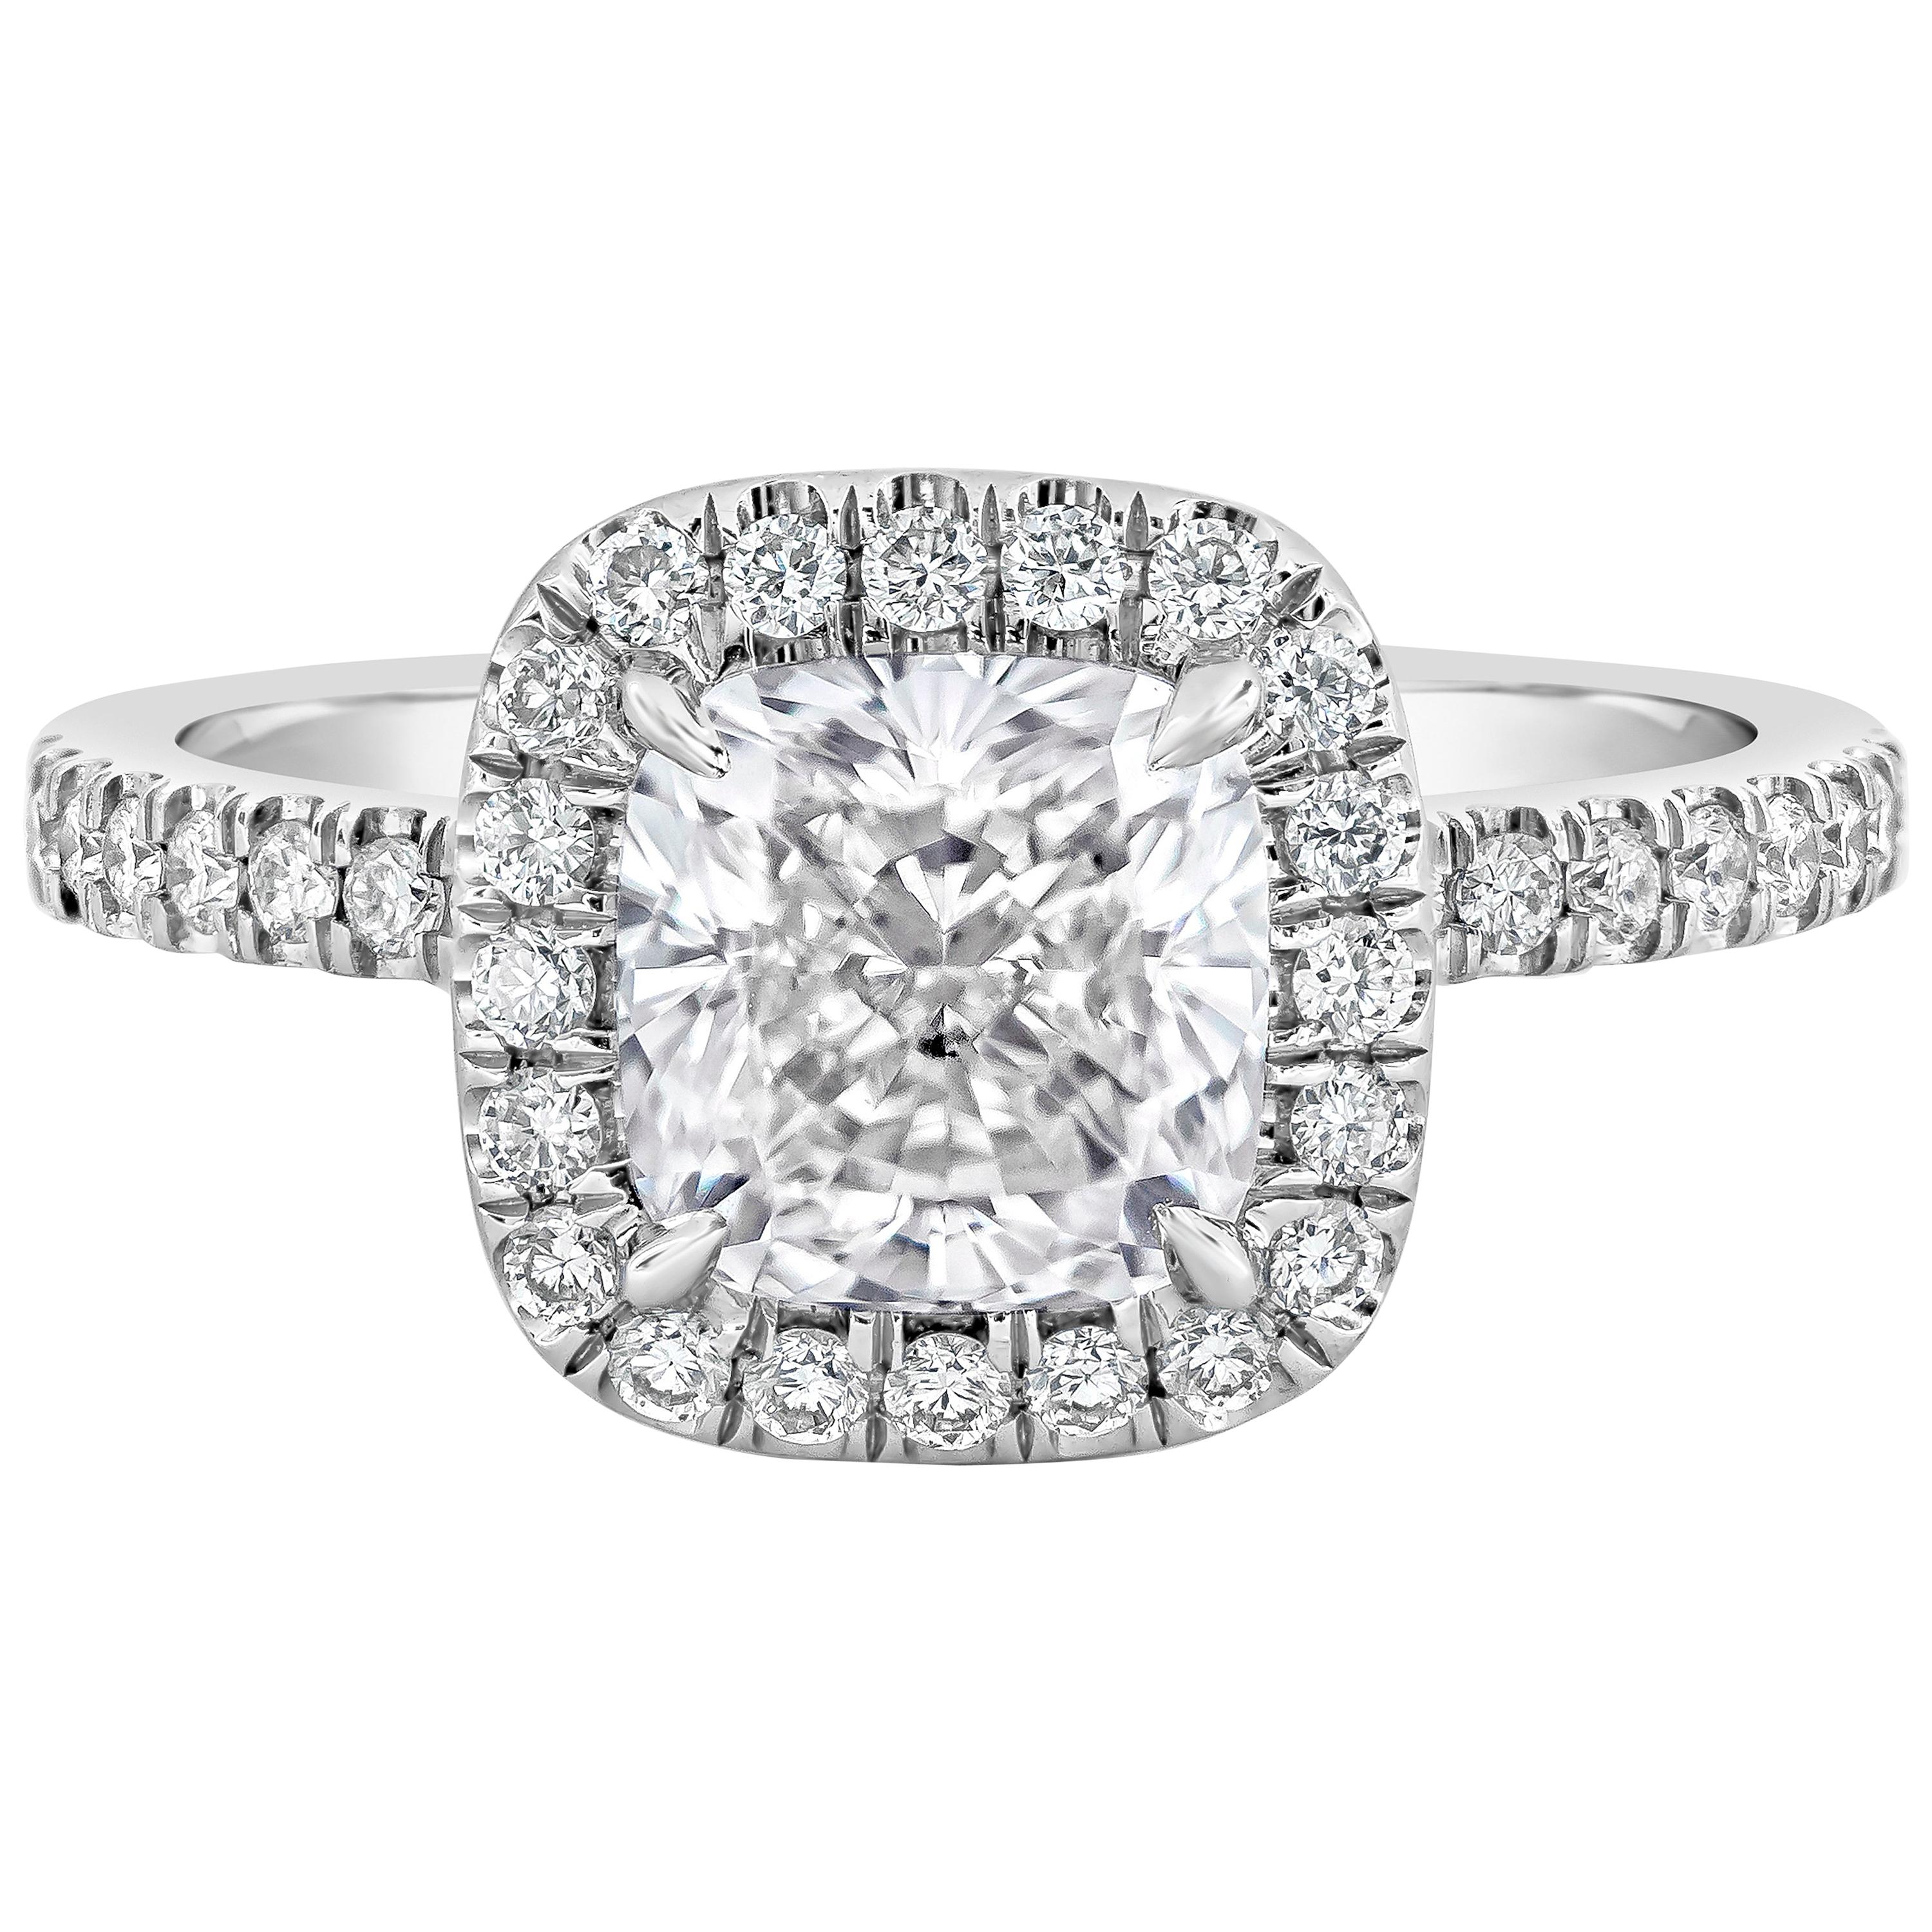 GIA Certified 1.81 Carats Cushion Cut Diamond Halo Engagement Ring